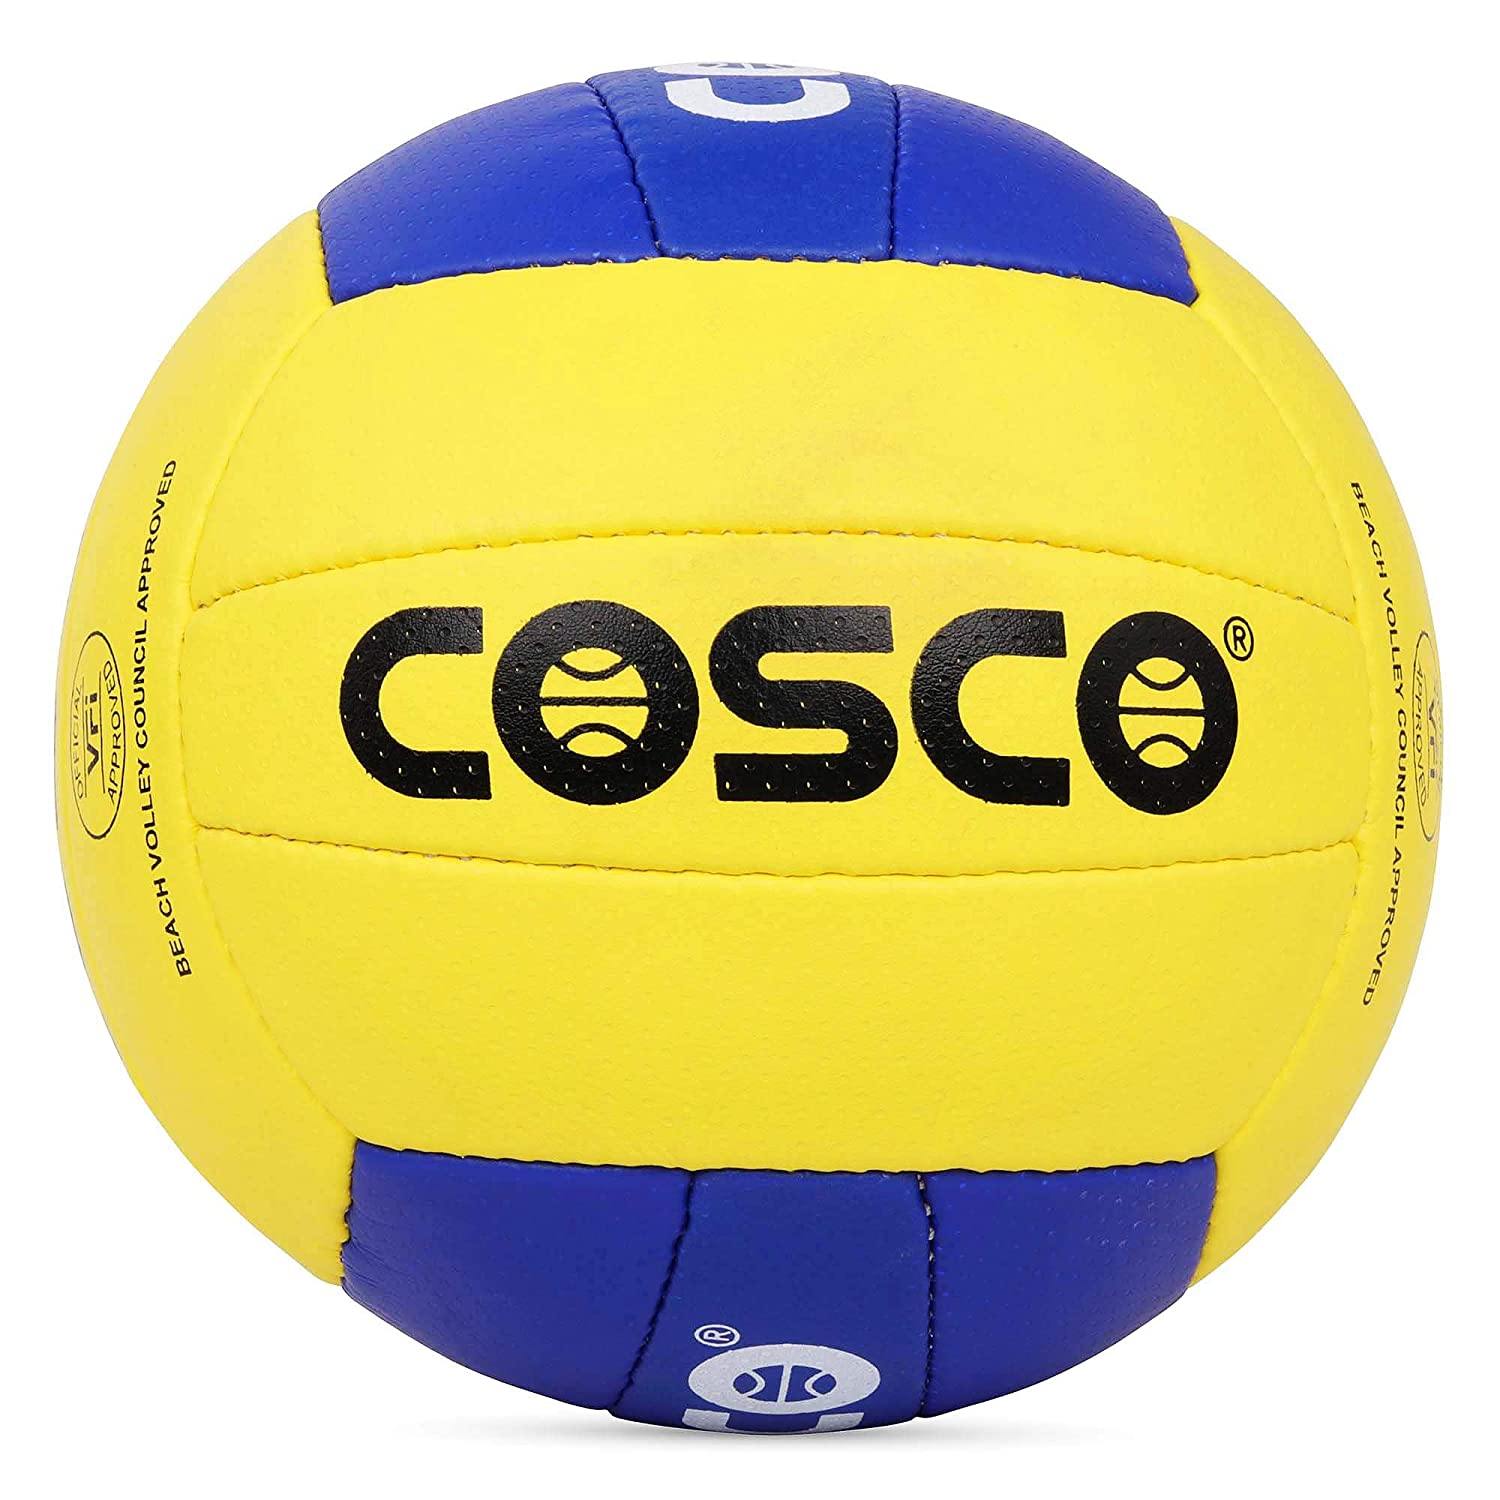 Cosco Beach Volley Ball, Size 4 - Best Price online Prokicksports.com